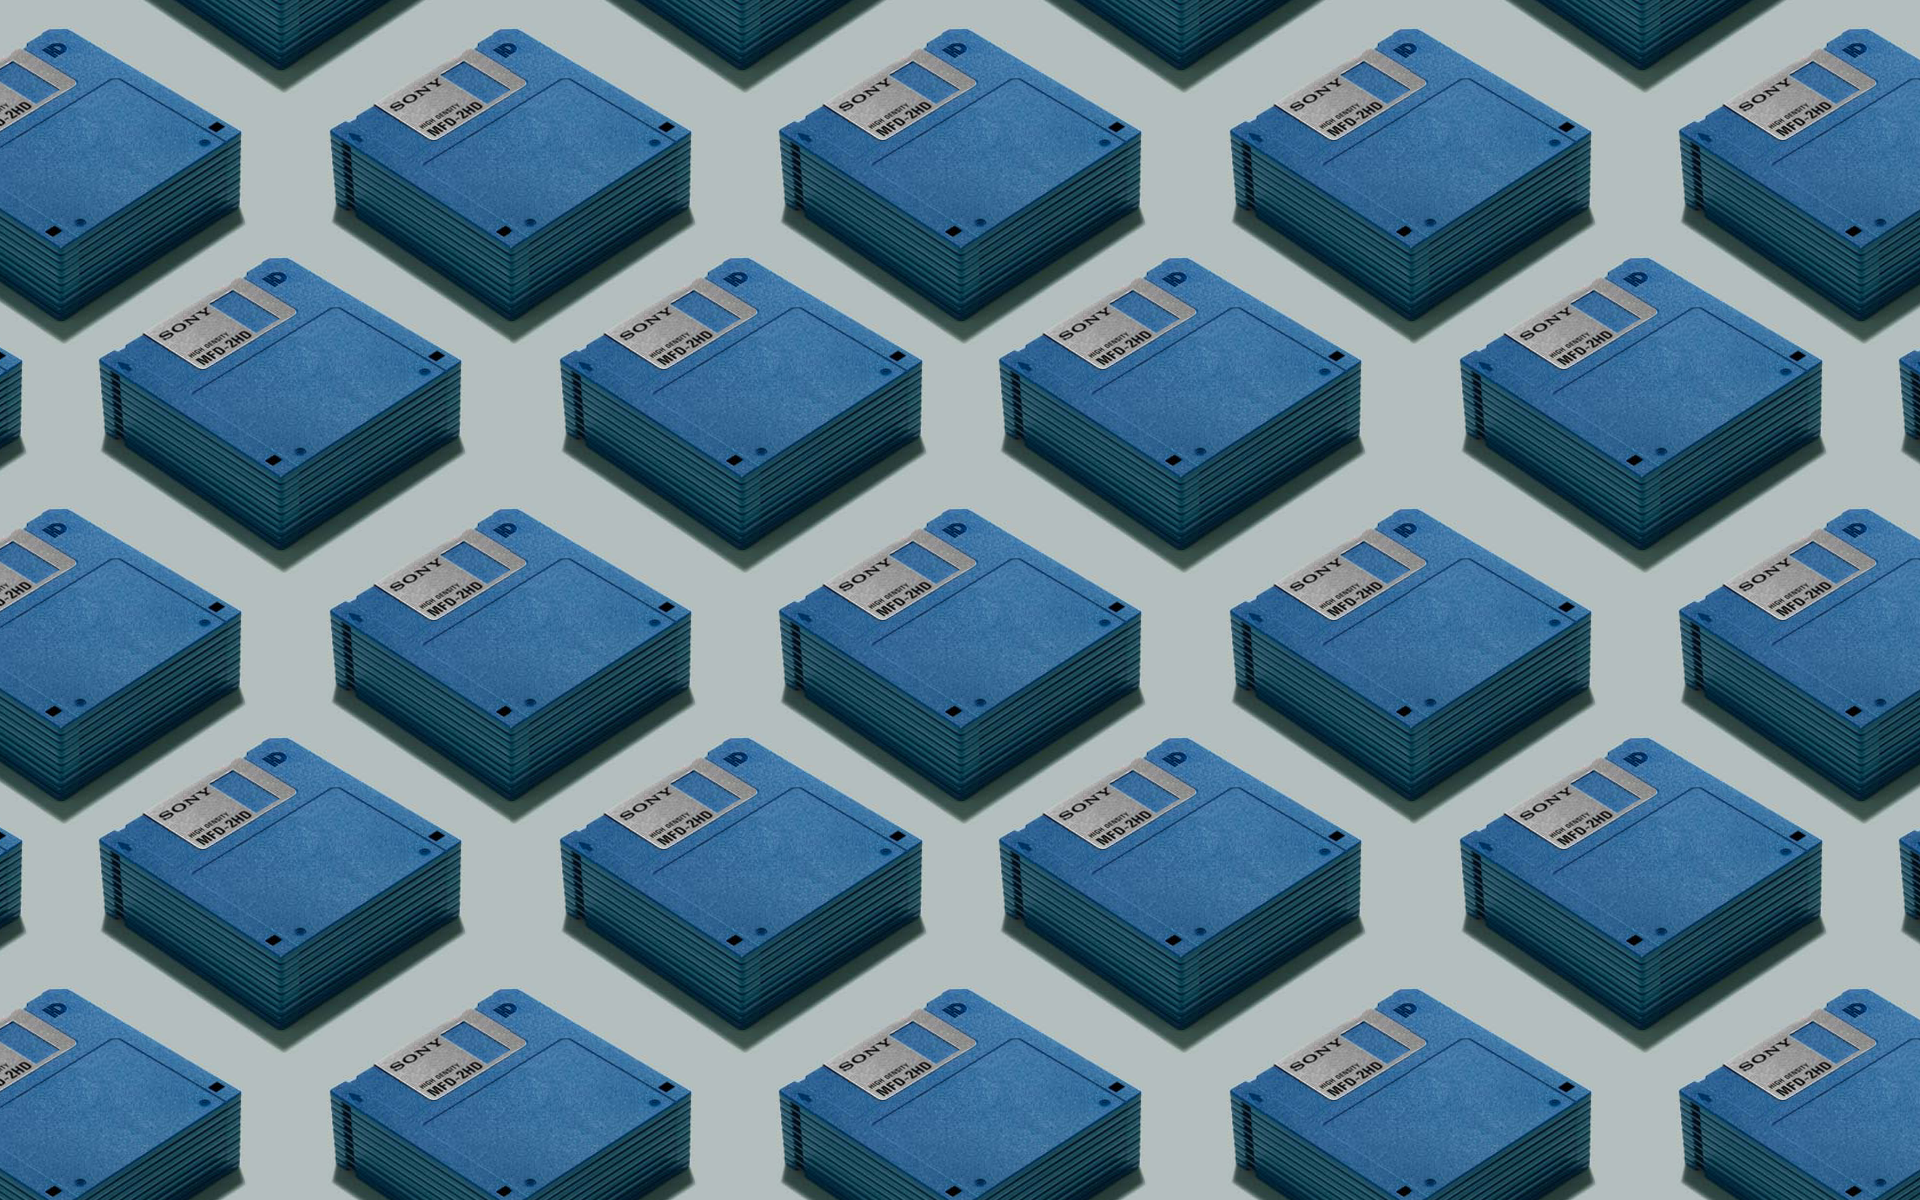 General 1920x1200 blue floppy disk computer